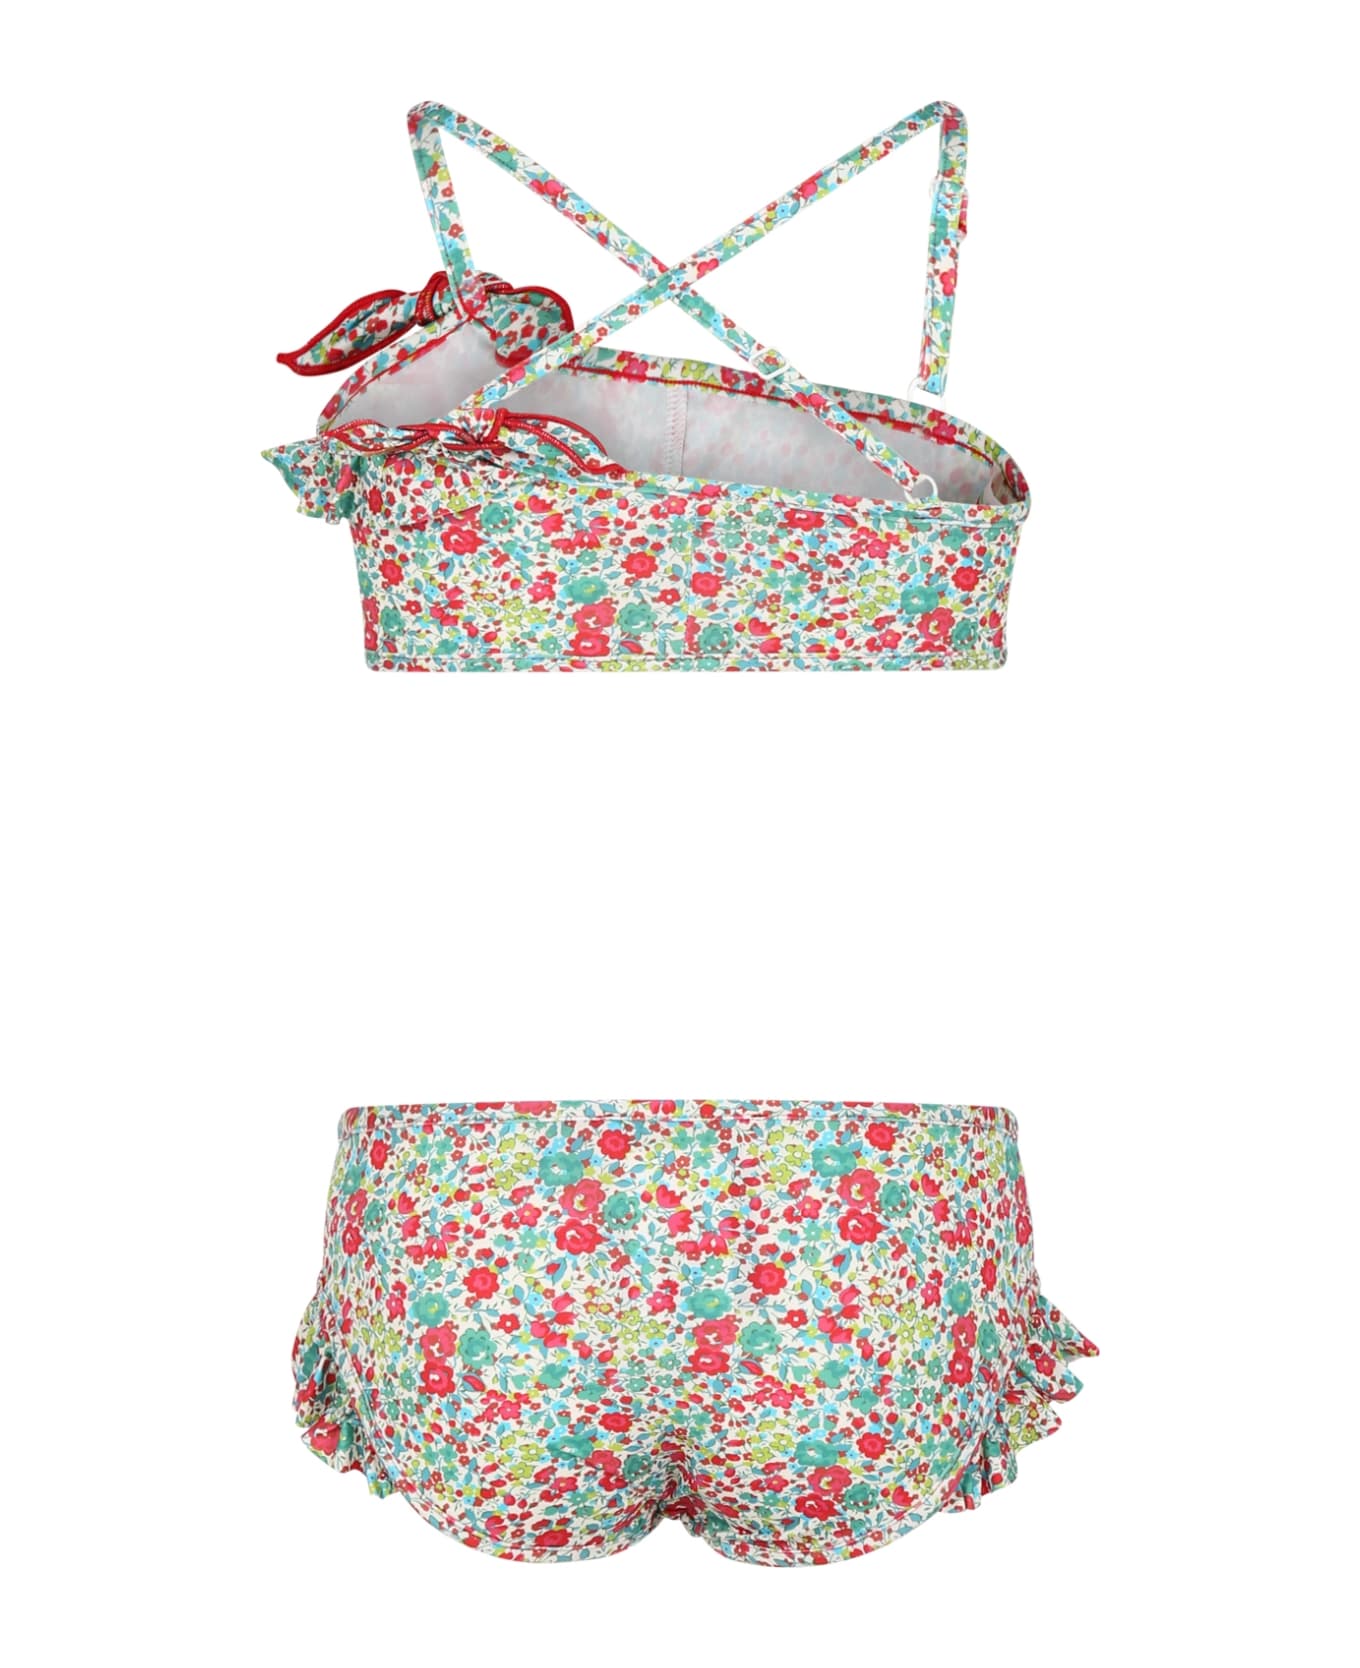 Bonpoint Bikini Multicolore Pour Fille Avec Imprimé Liberty - Multicolor